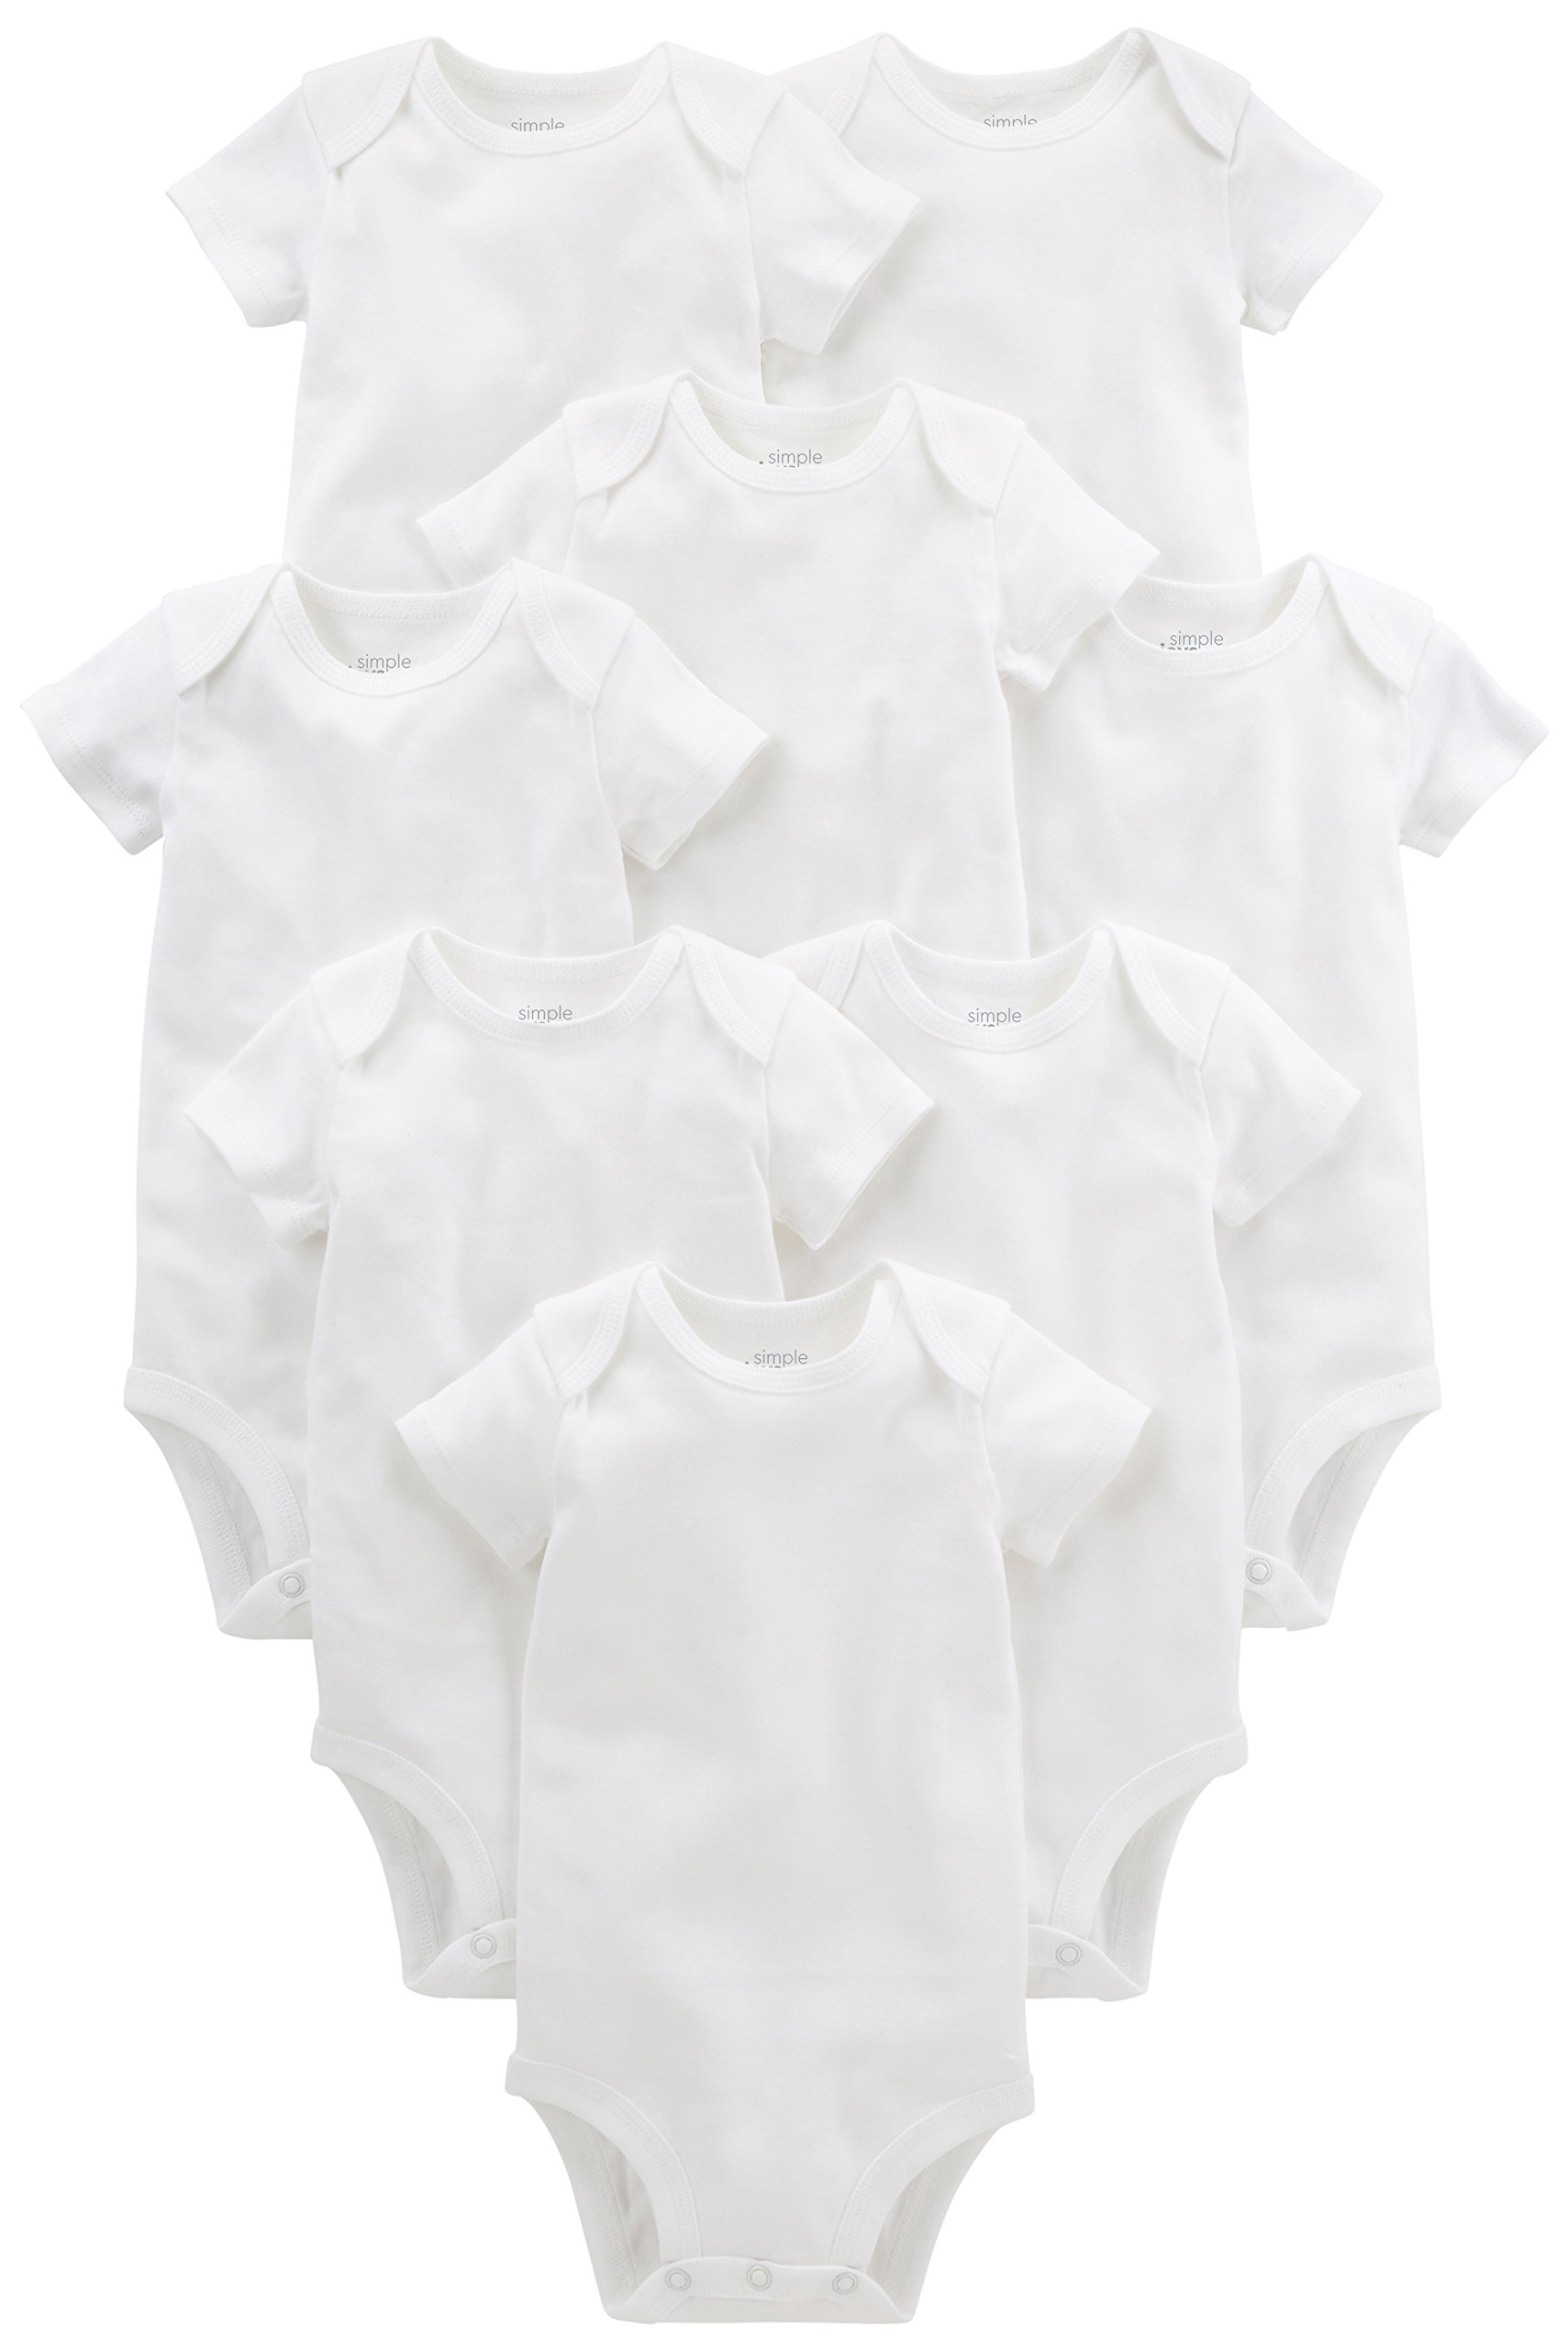 Simple Joys by Carter's Unisex Babies' Short-Sleeve Bodysuit, Pack of 3